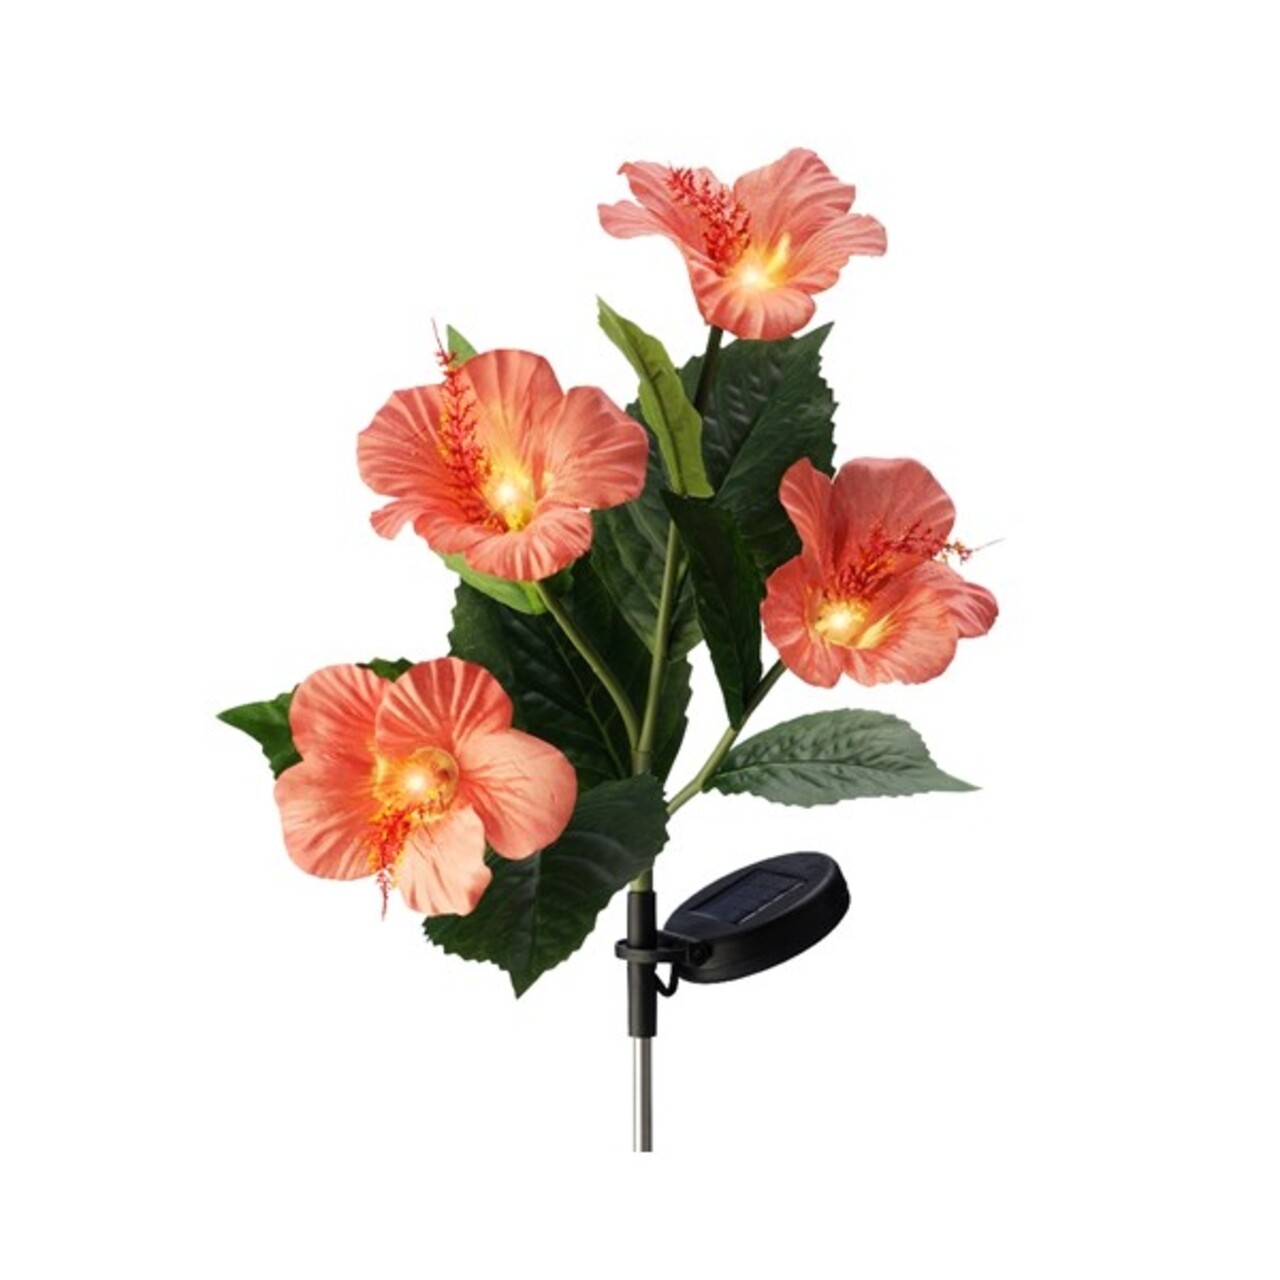 Flower kerti lámpa, Lumineo, 20x23x73 cm, 4 LED, narancs